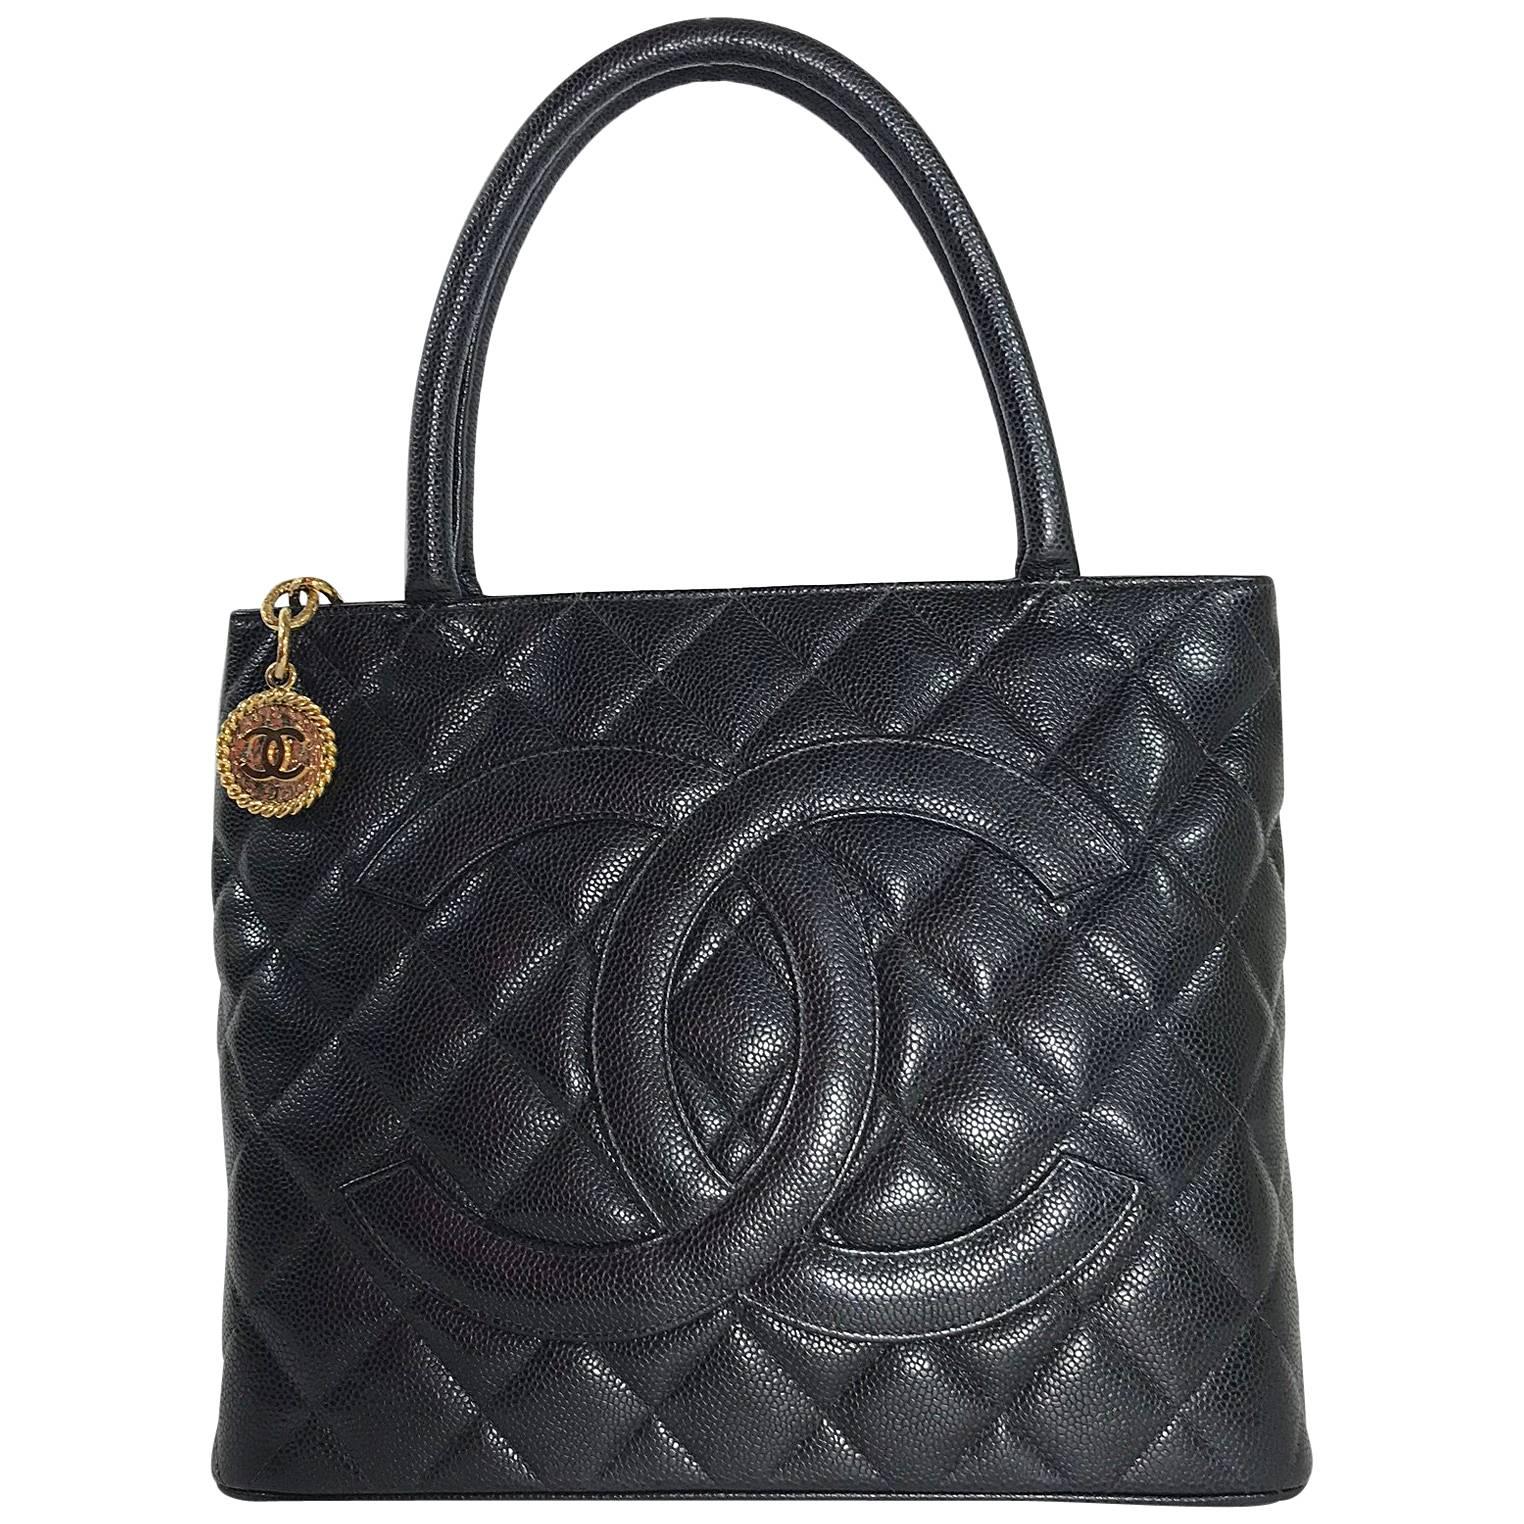 Chanel Caviar Leather Medallion with Gold Hardware in Black Shoulder Bag